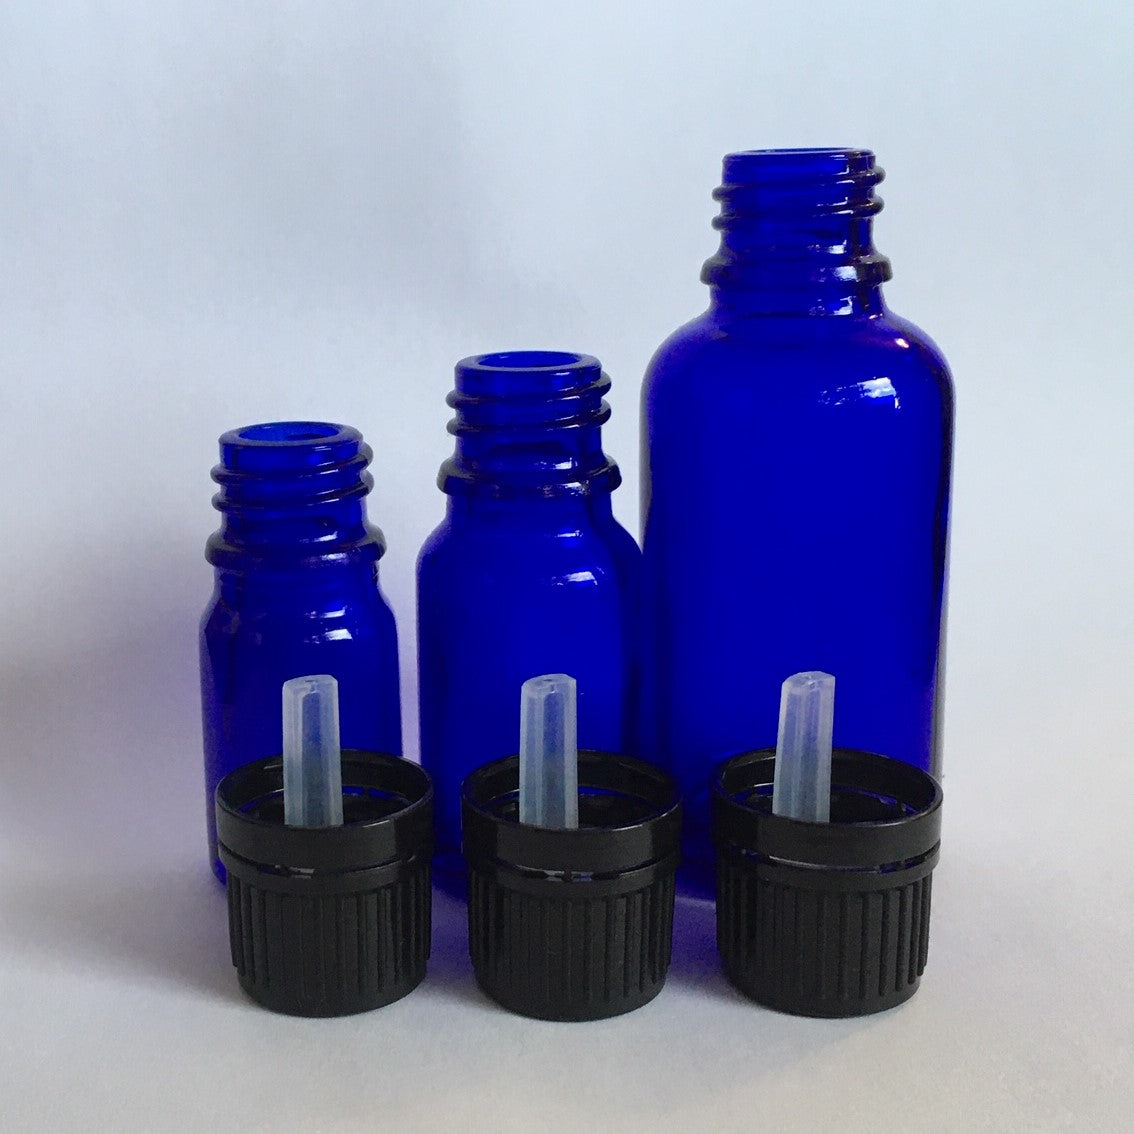 European Dropper Bottles - Blue